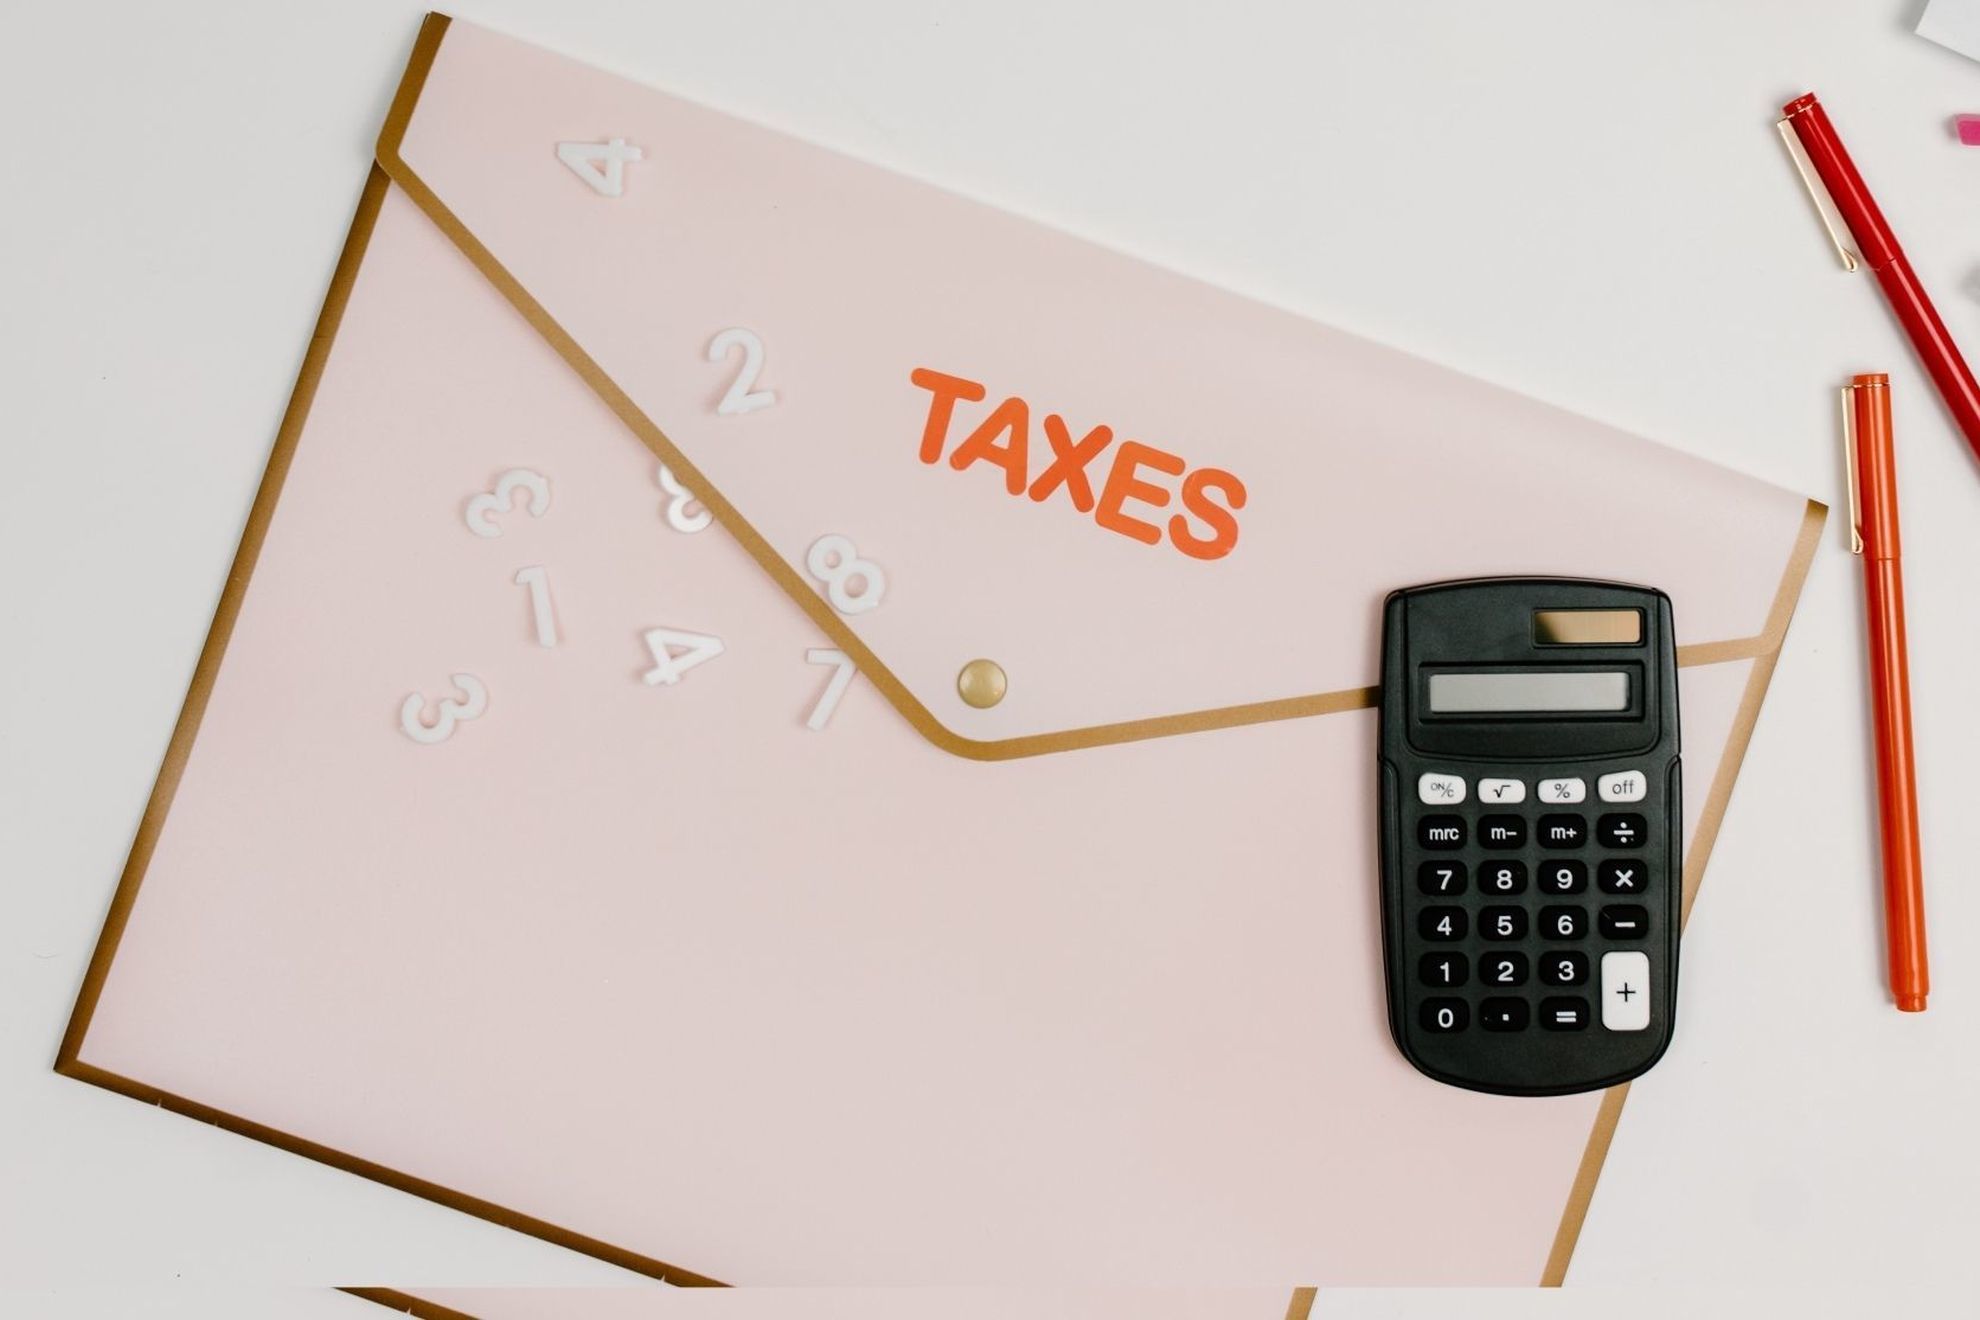 IRS Reimbursements: What kind of reimbursements are taxable?